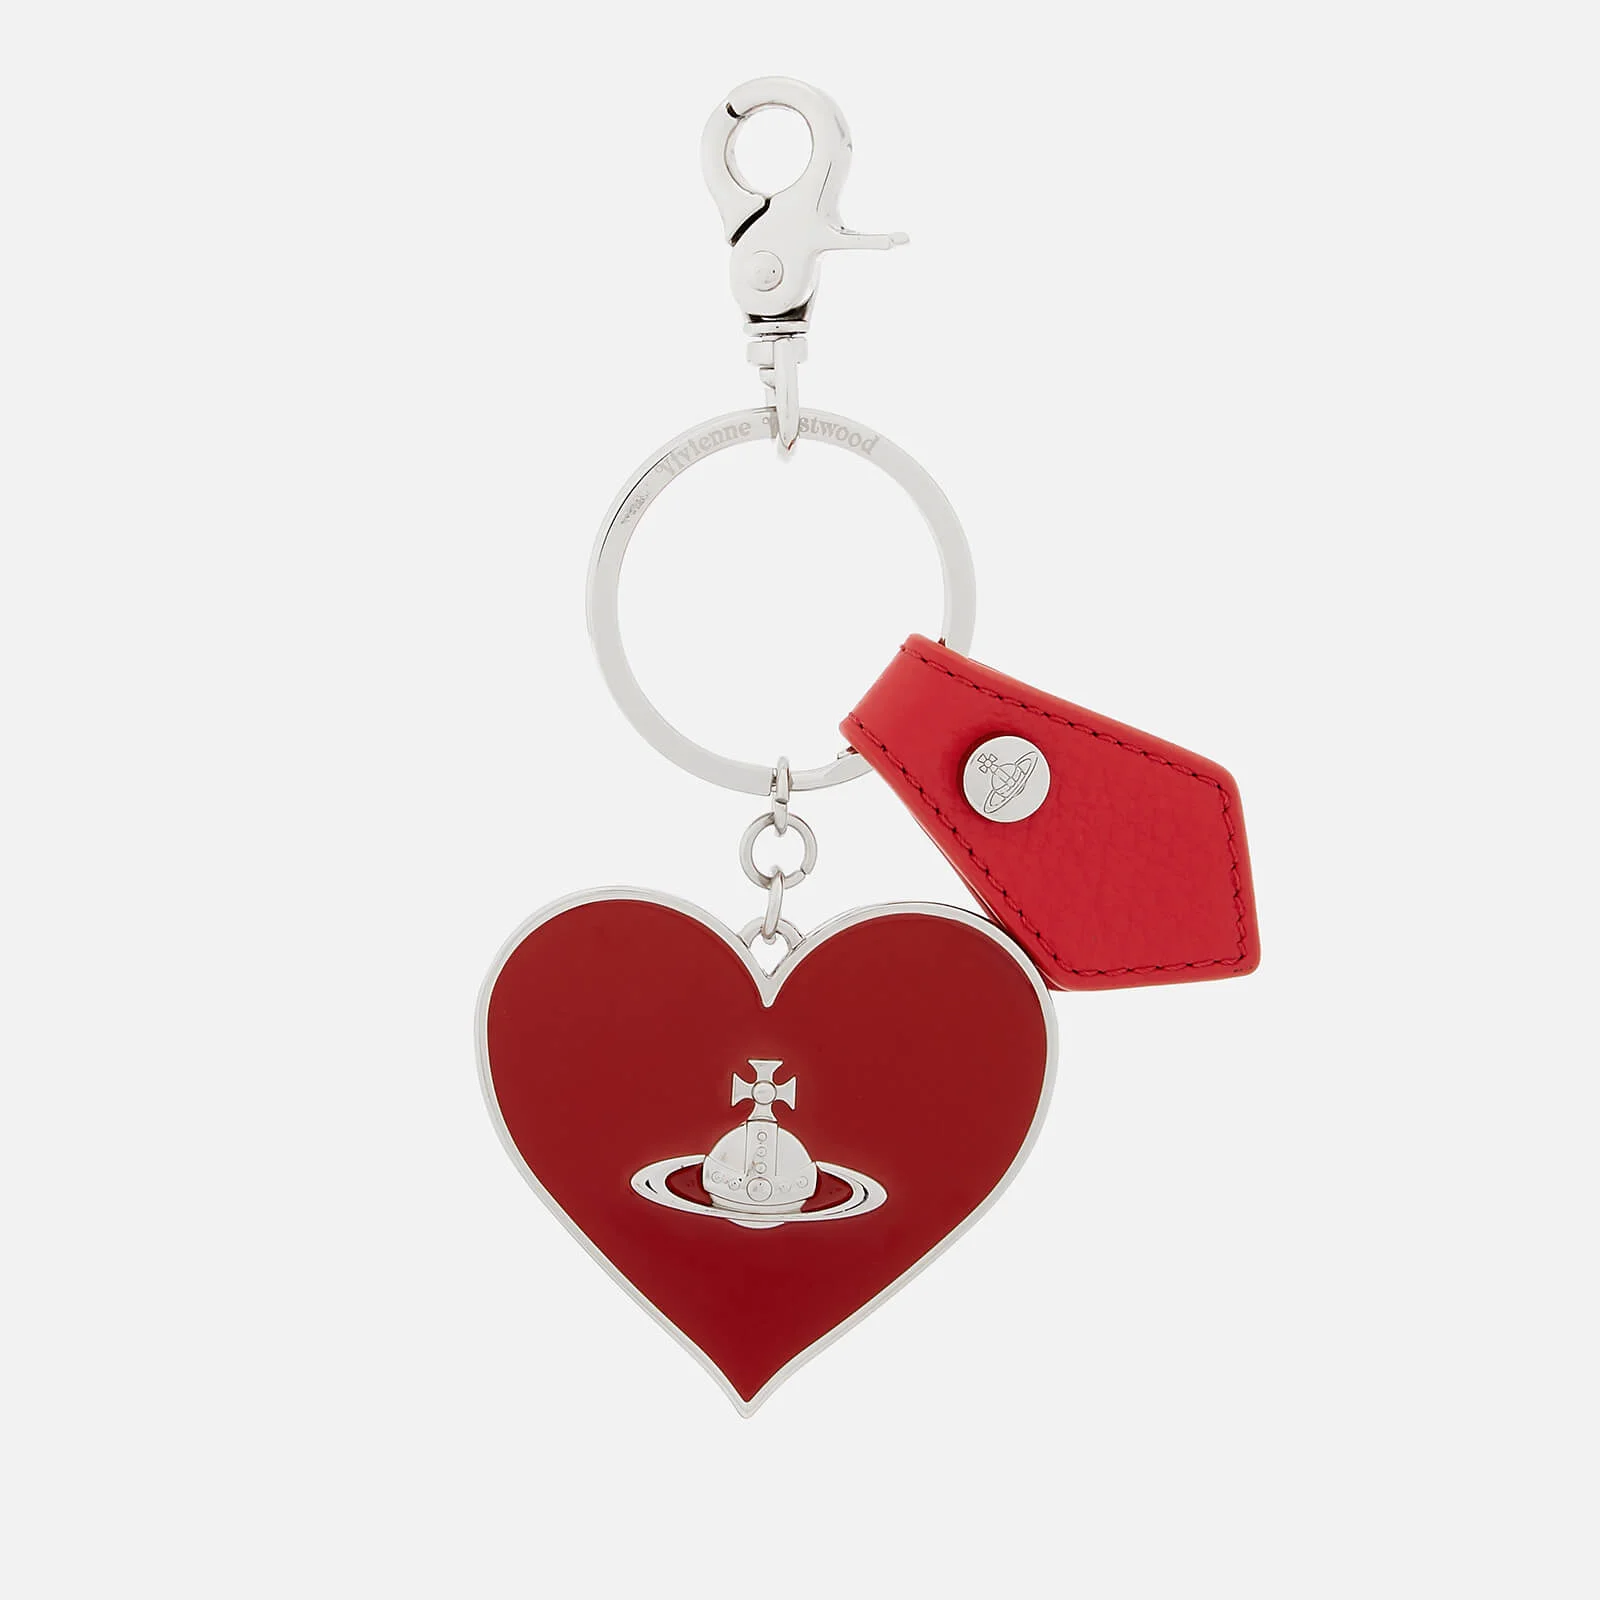 Vivienne Westwood Women's Balmoral Mirror Heart Gadget Keyring - Red Image 1